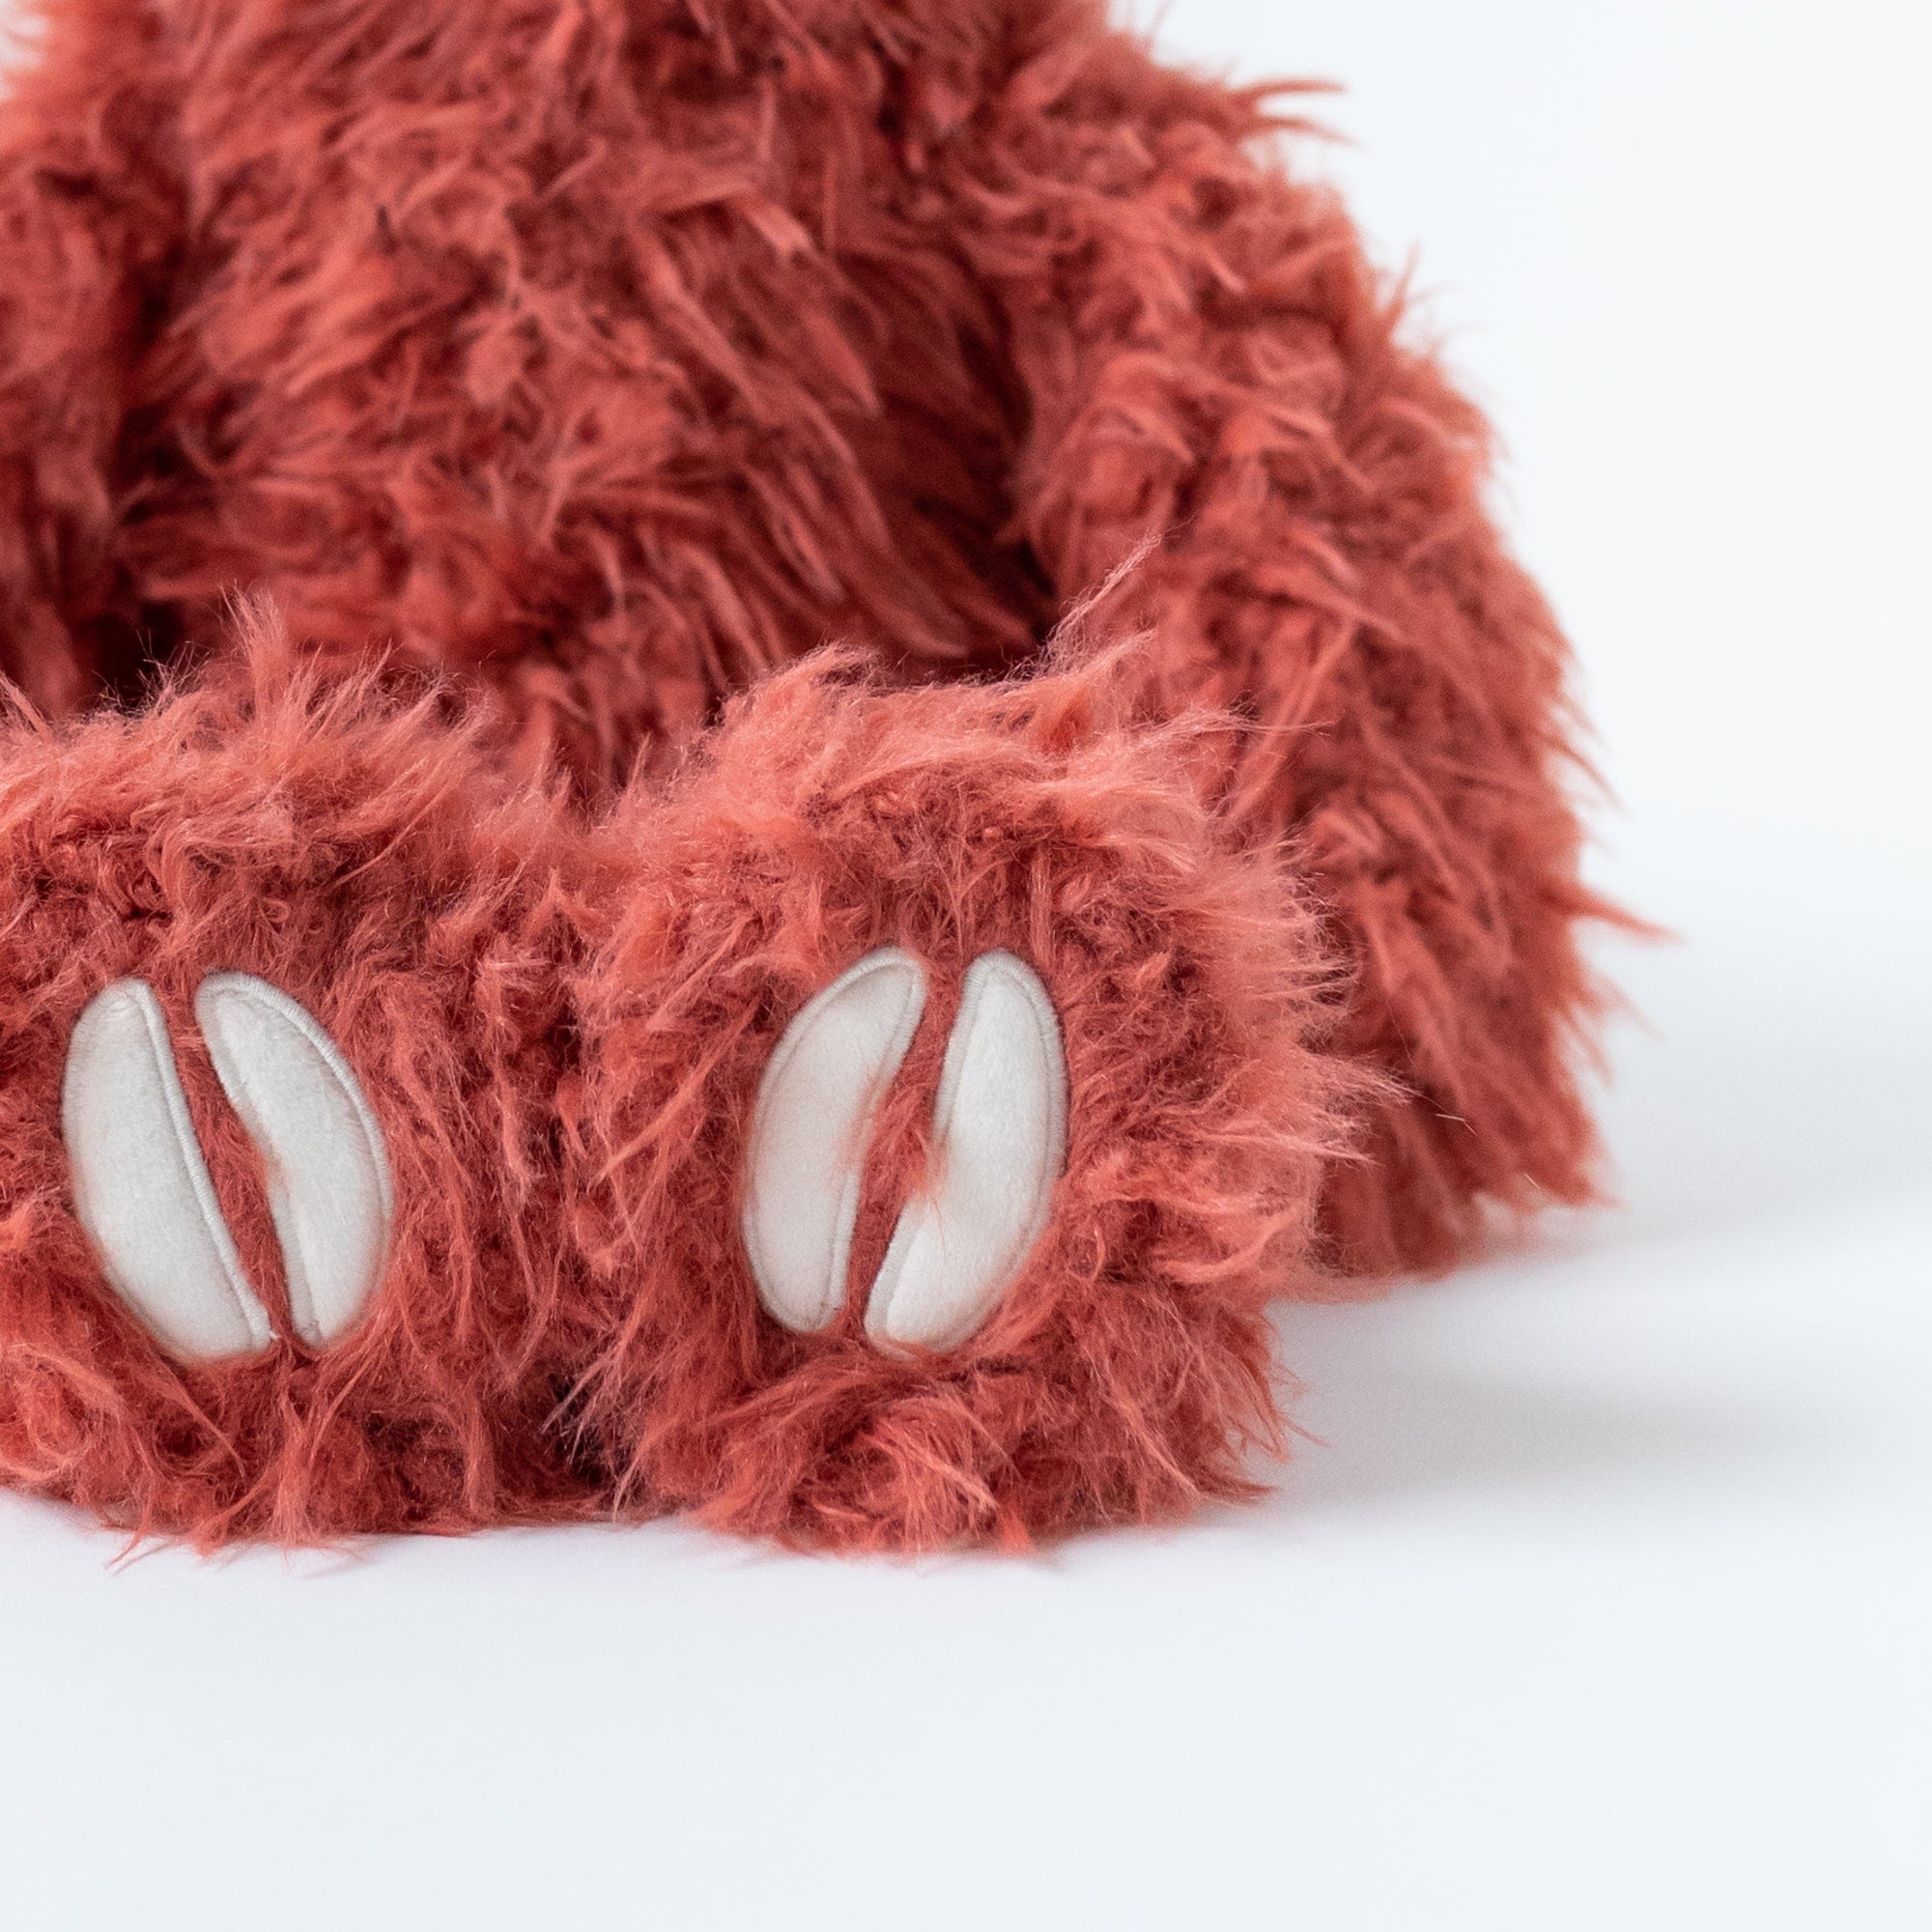 Close-up of feet of ultra-plush Alpaca stuffed animal - View Product